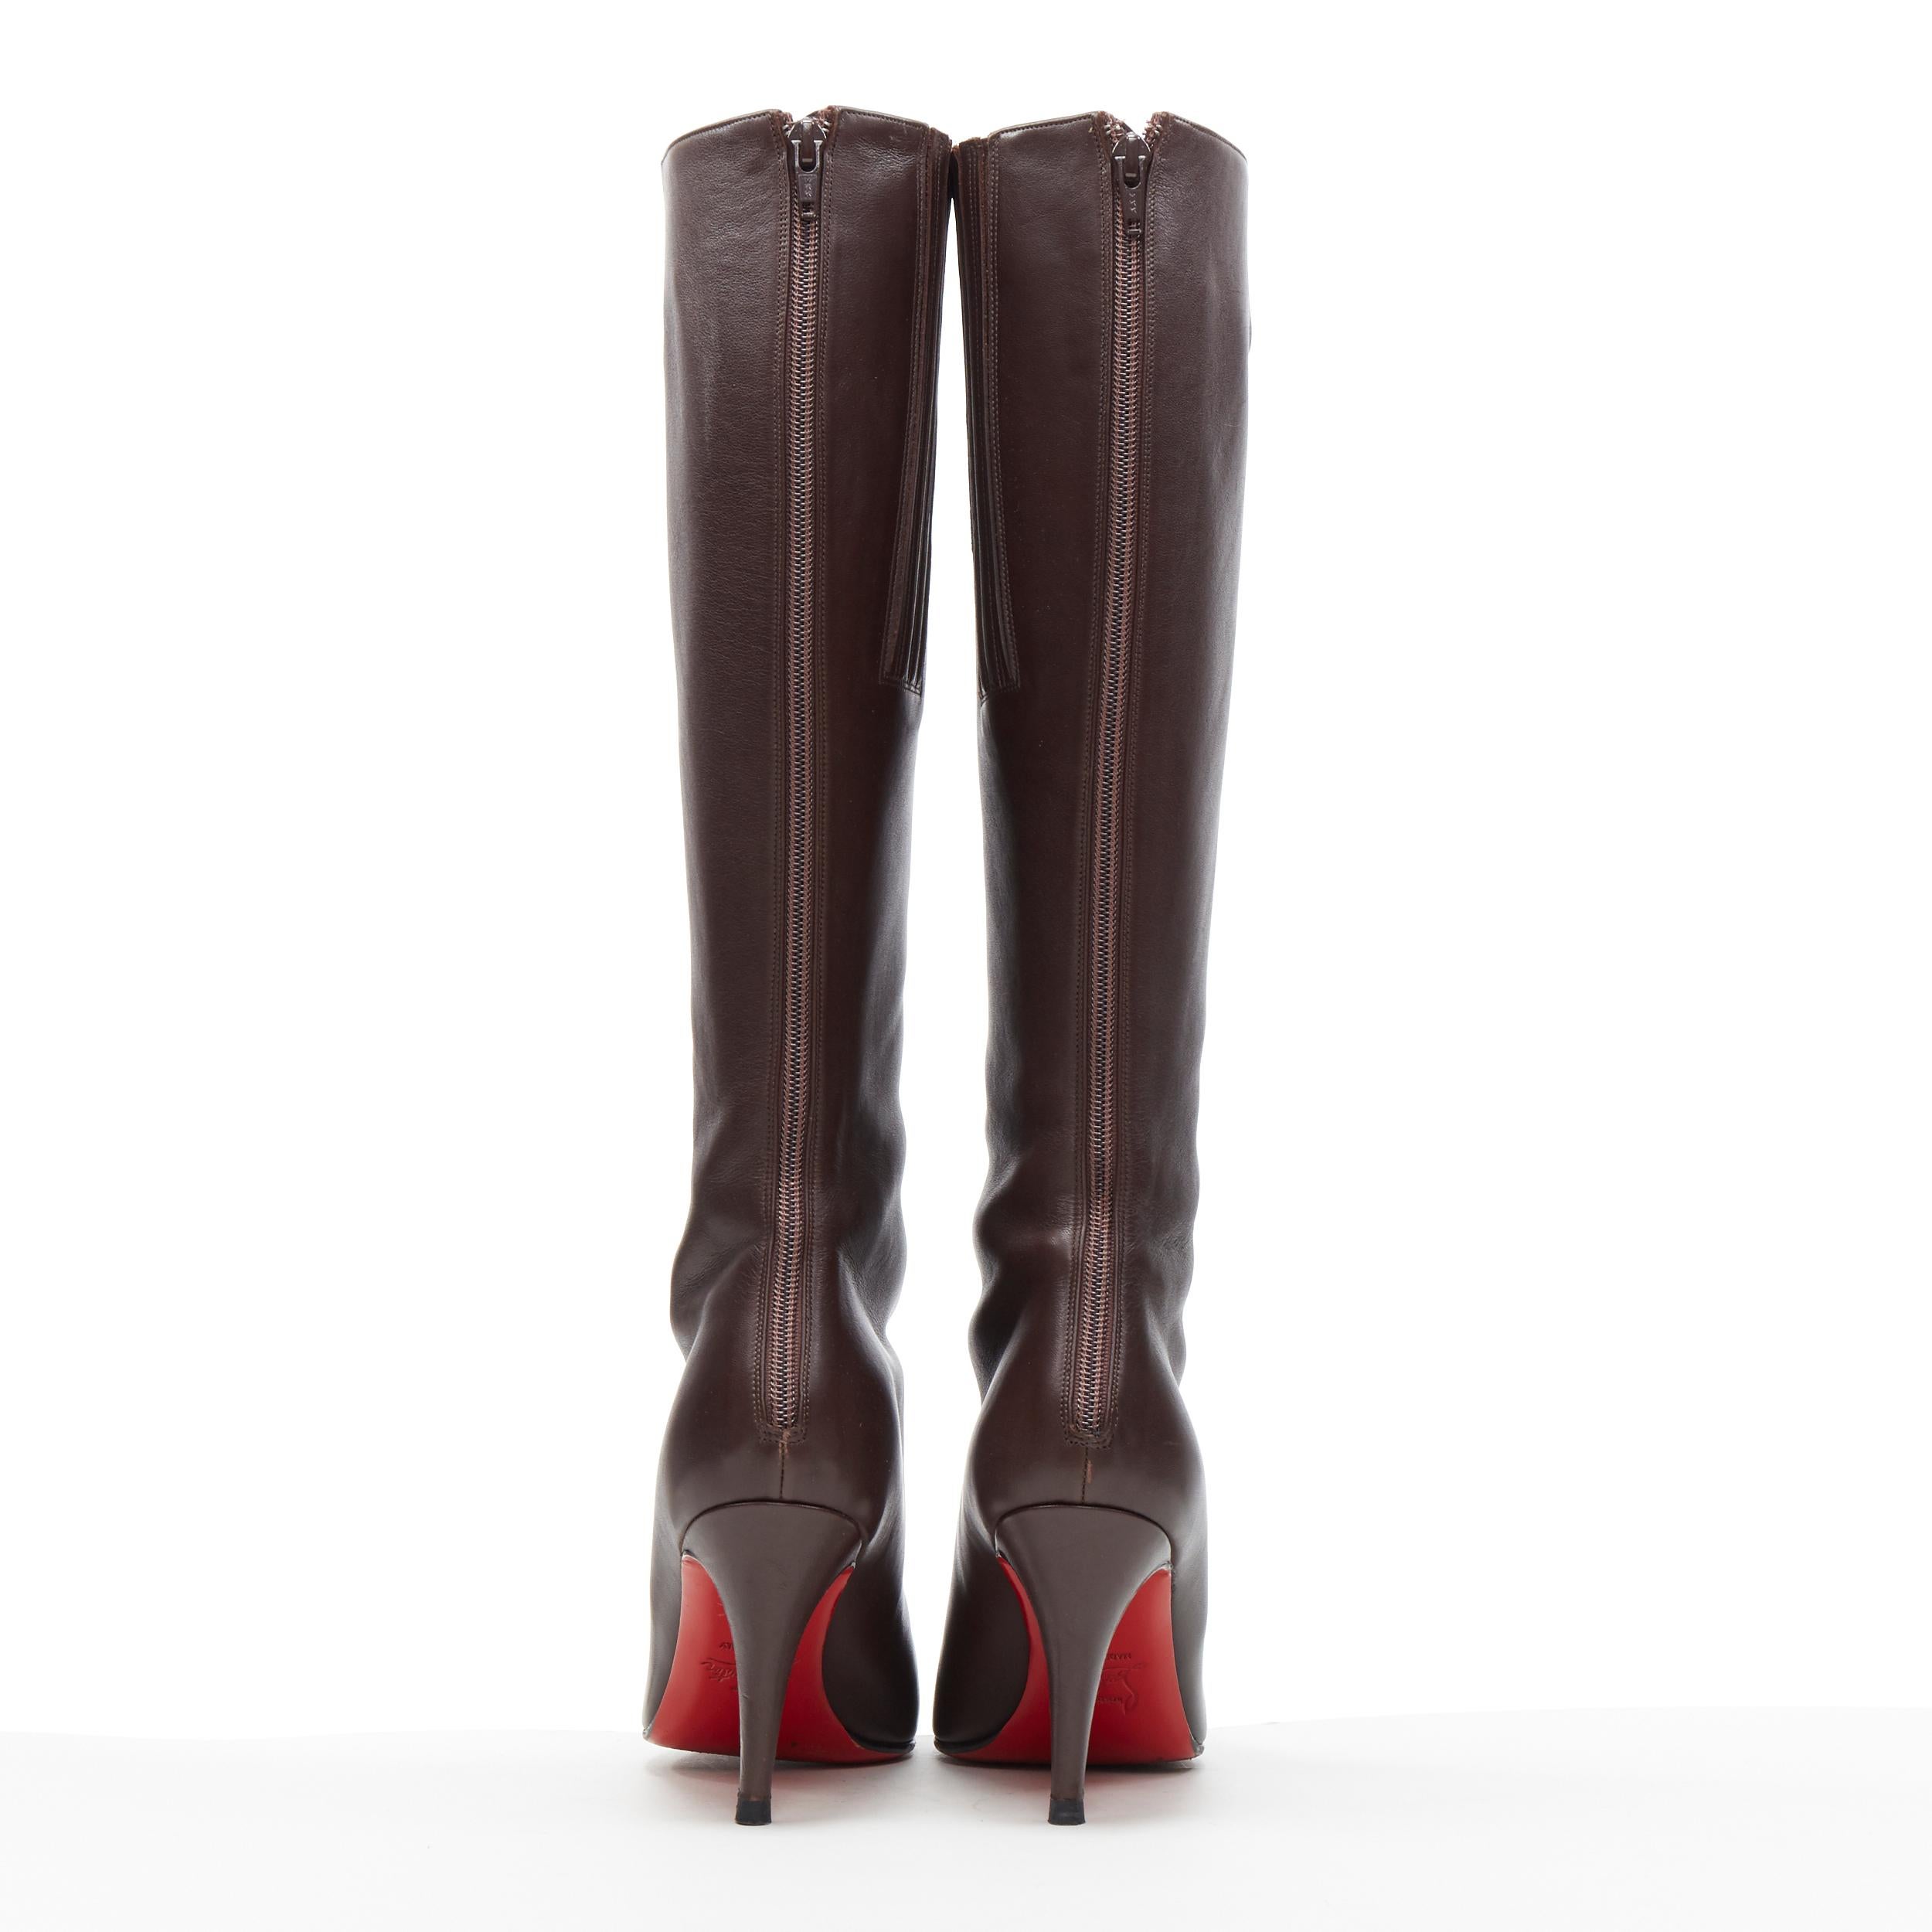 Women's CHRISTIAN LOUBOUTIN dark brown leather almond toe high heel tall boots EU39